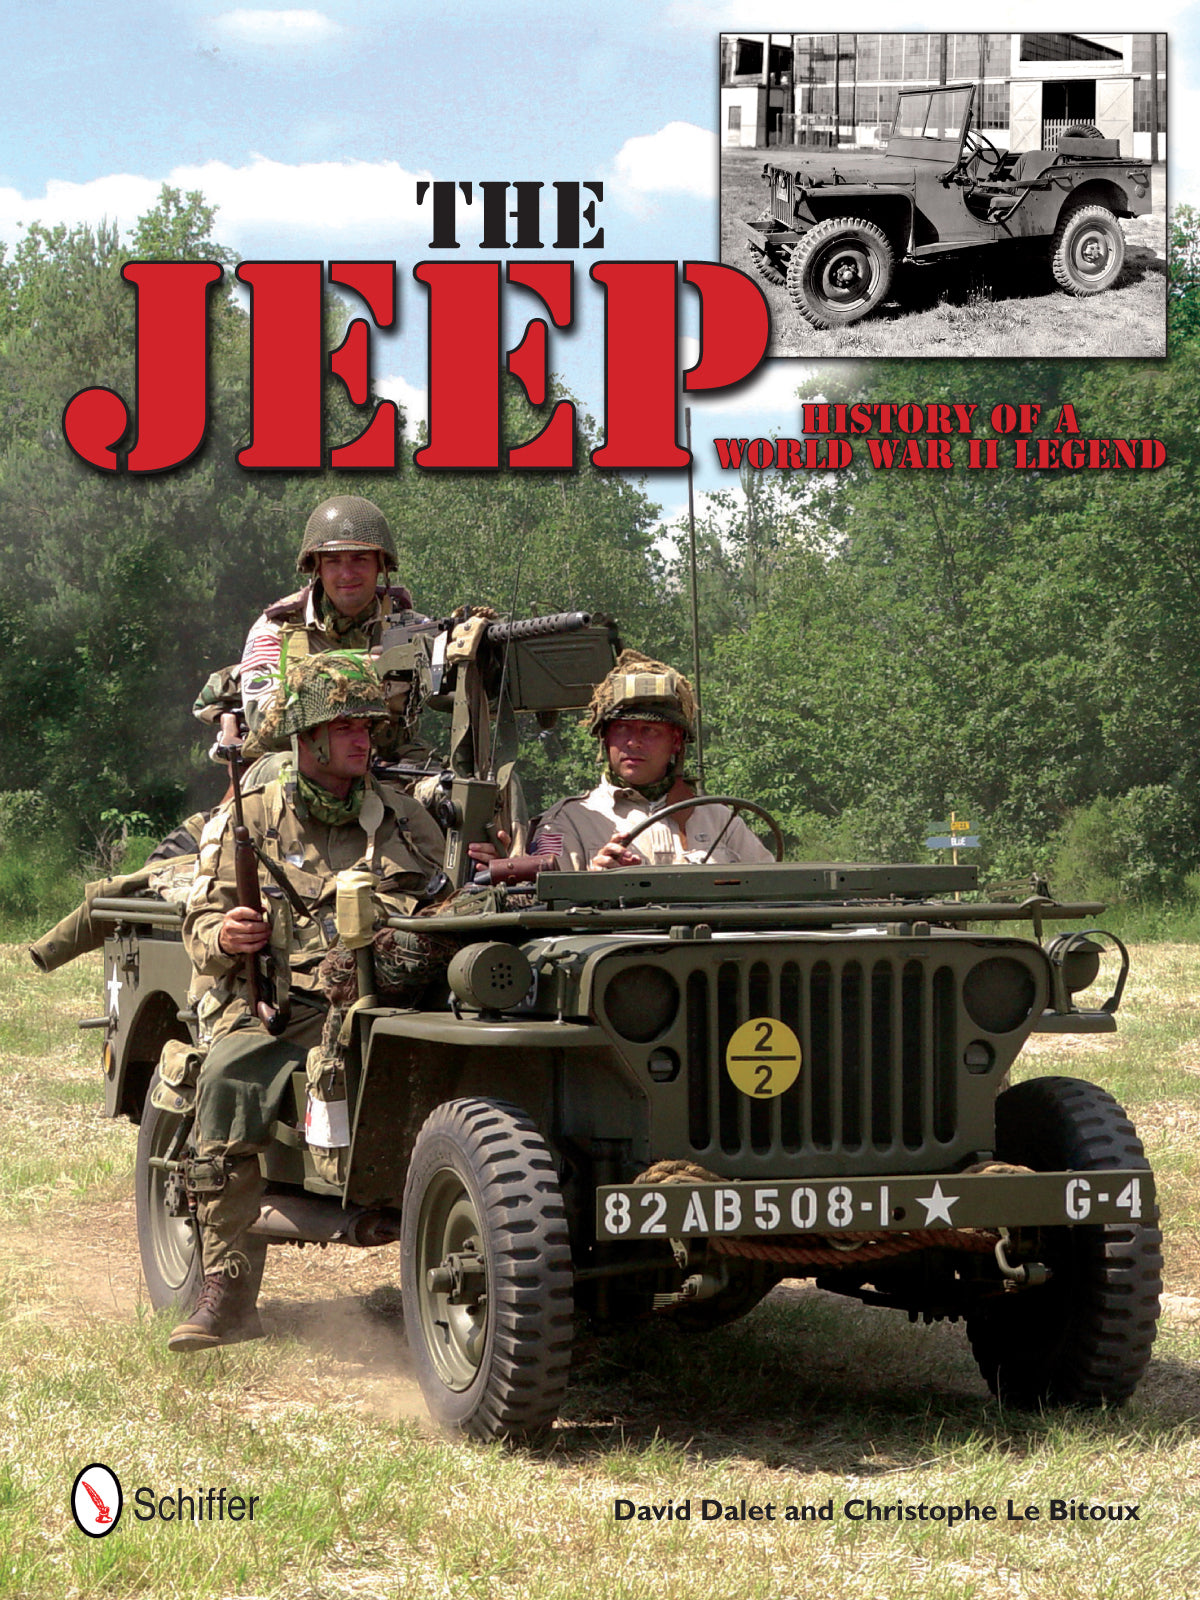 The Jeep: History of a World War II Legend